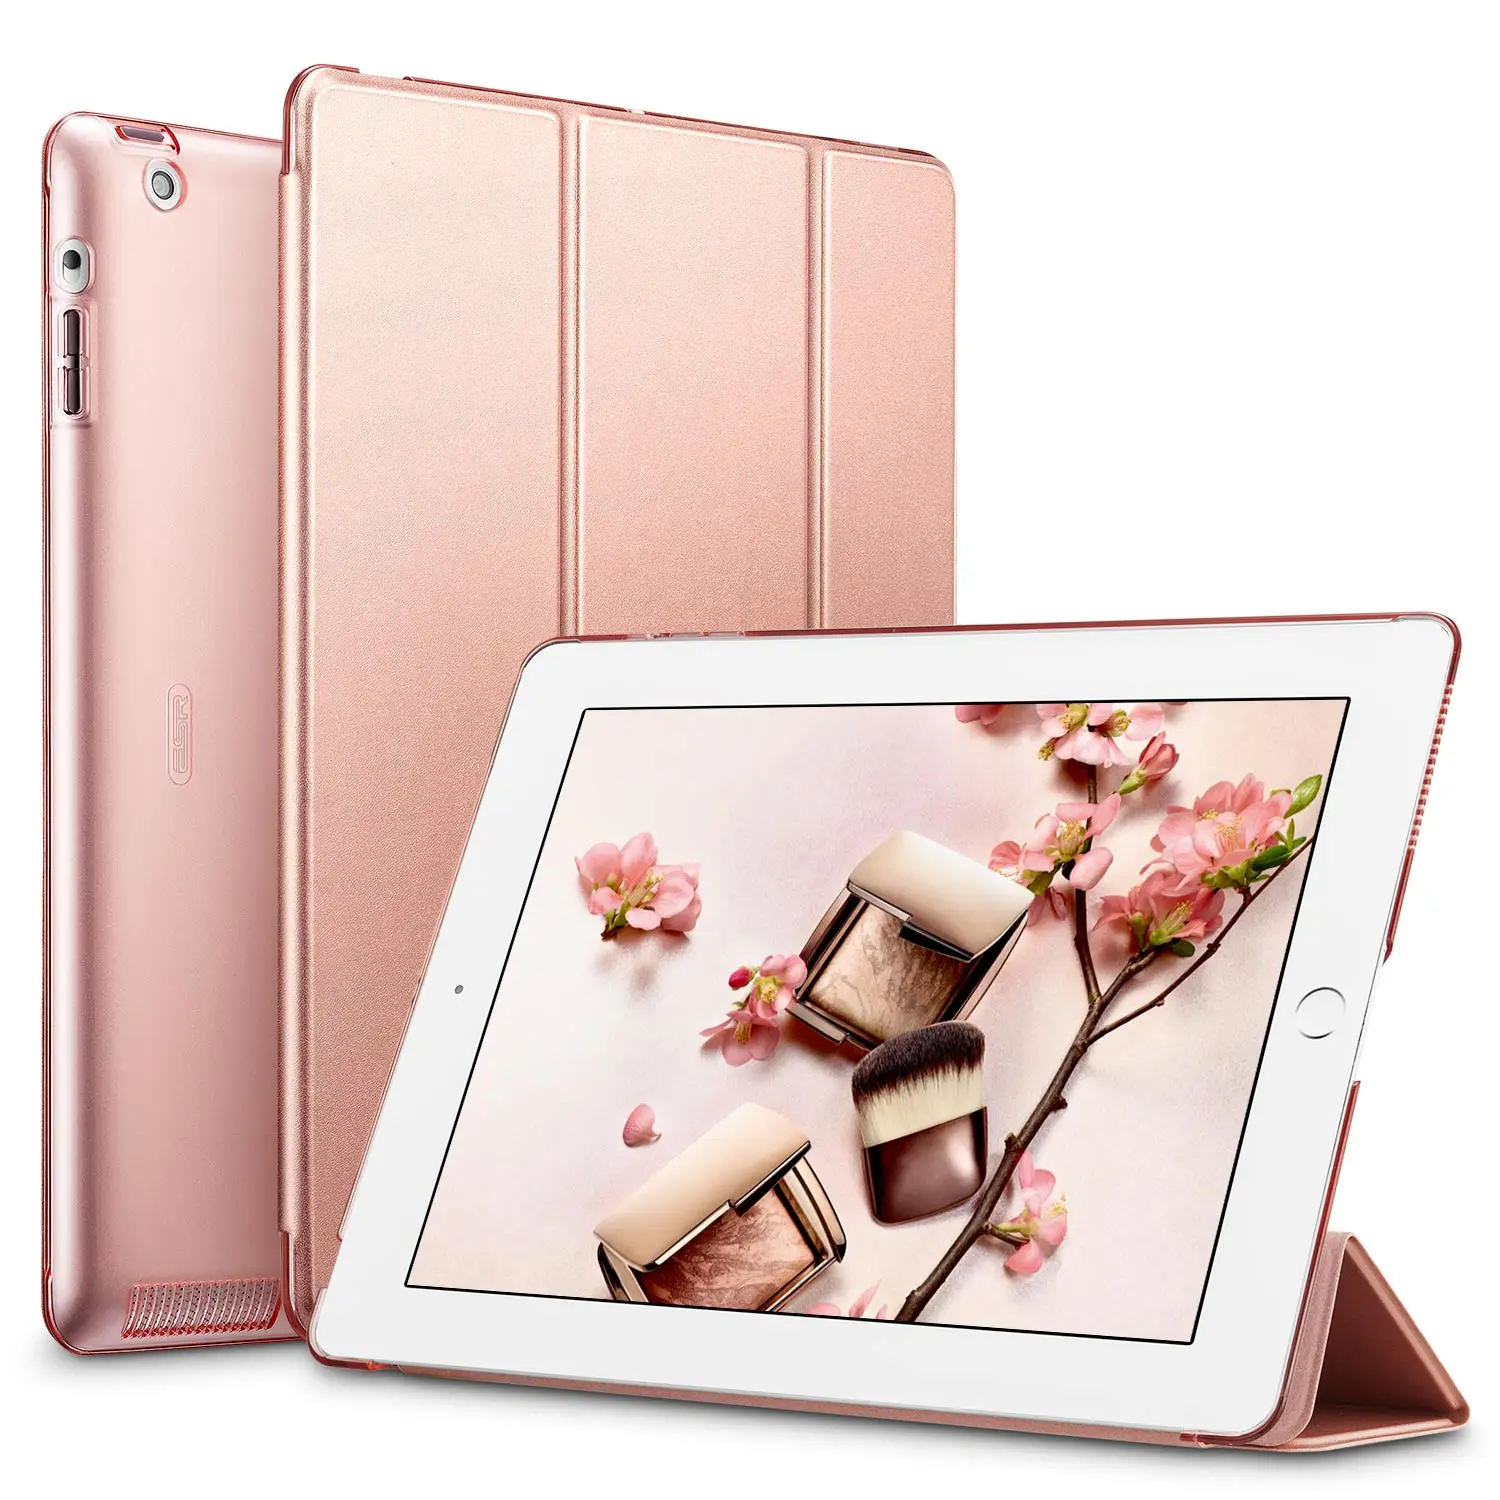 Чехол ESR Yippee Series множество цветов, ультра тонкий для iPad 2/3/4 - Цвет: Rose Gold